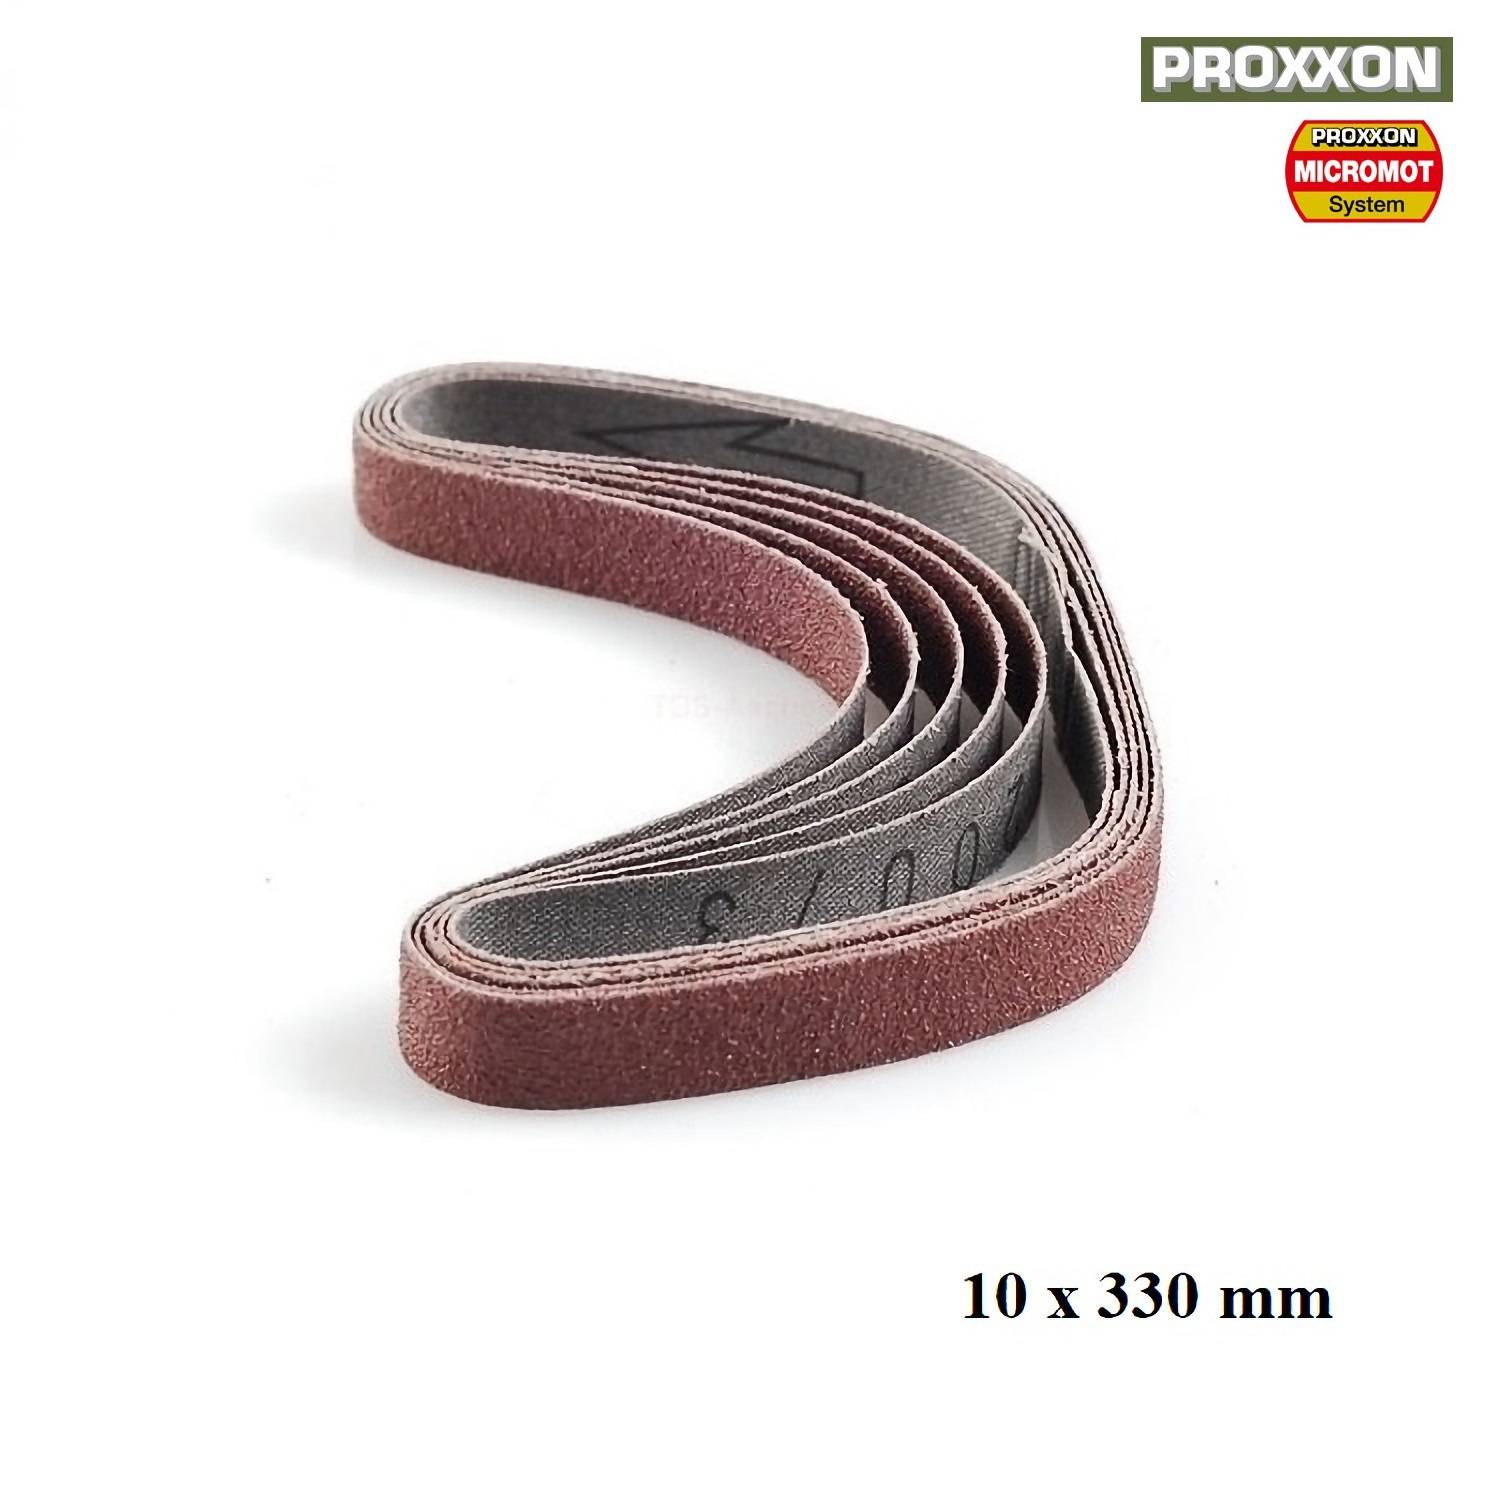 schuurband-10x330mm-Proxxon